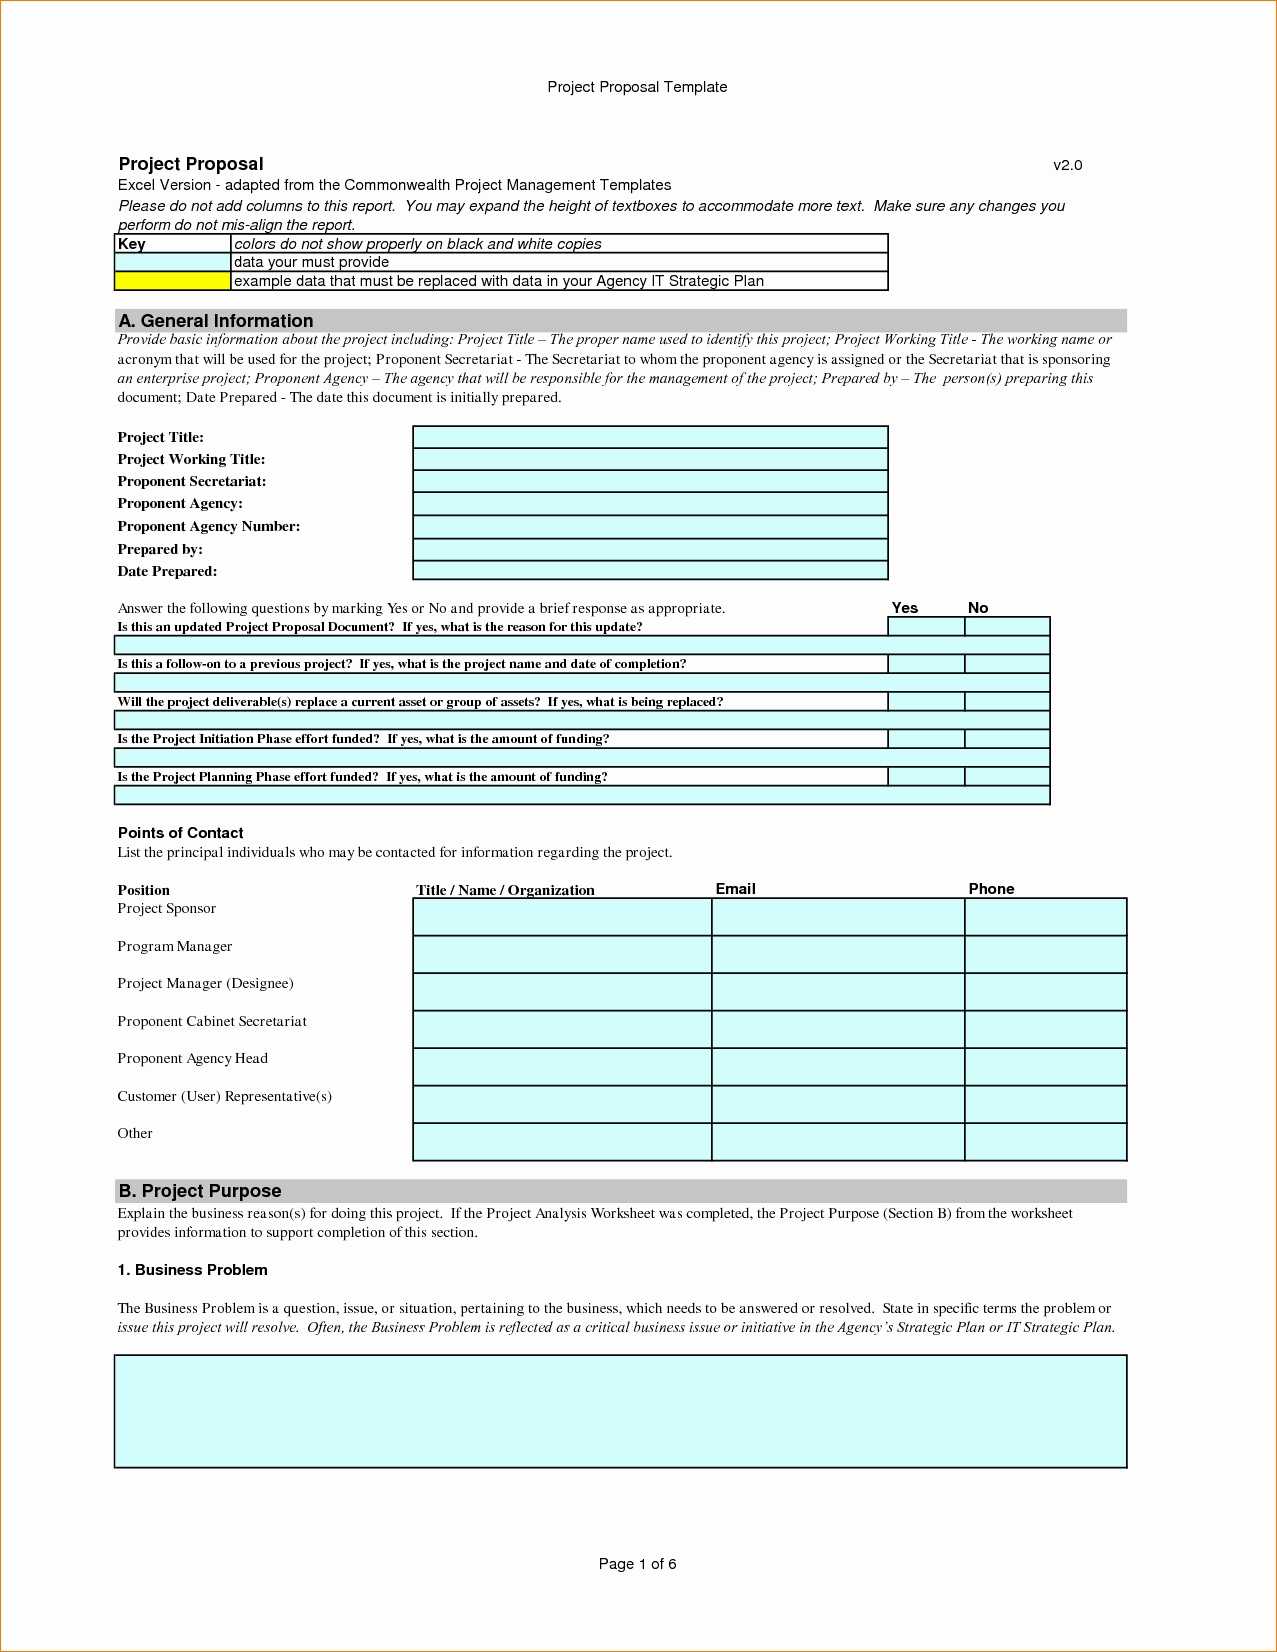 Itemized Deductions Worksheet or 12 Beautiful Small Business Itemized Deductions Worksheet